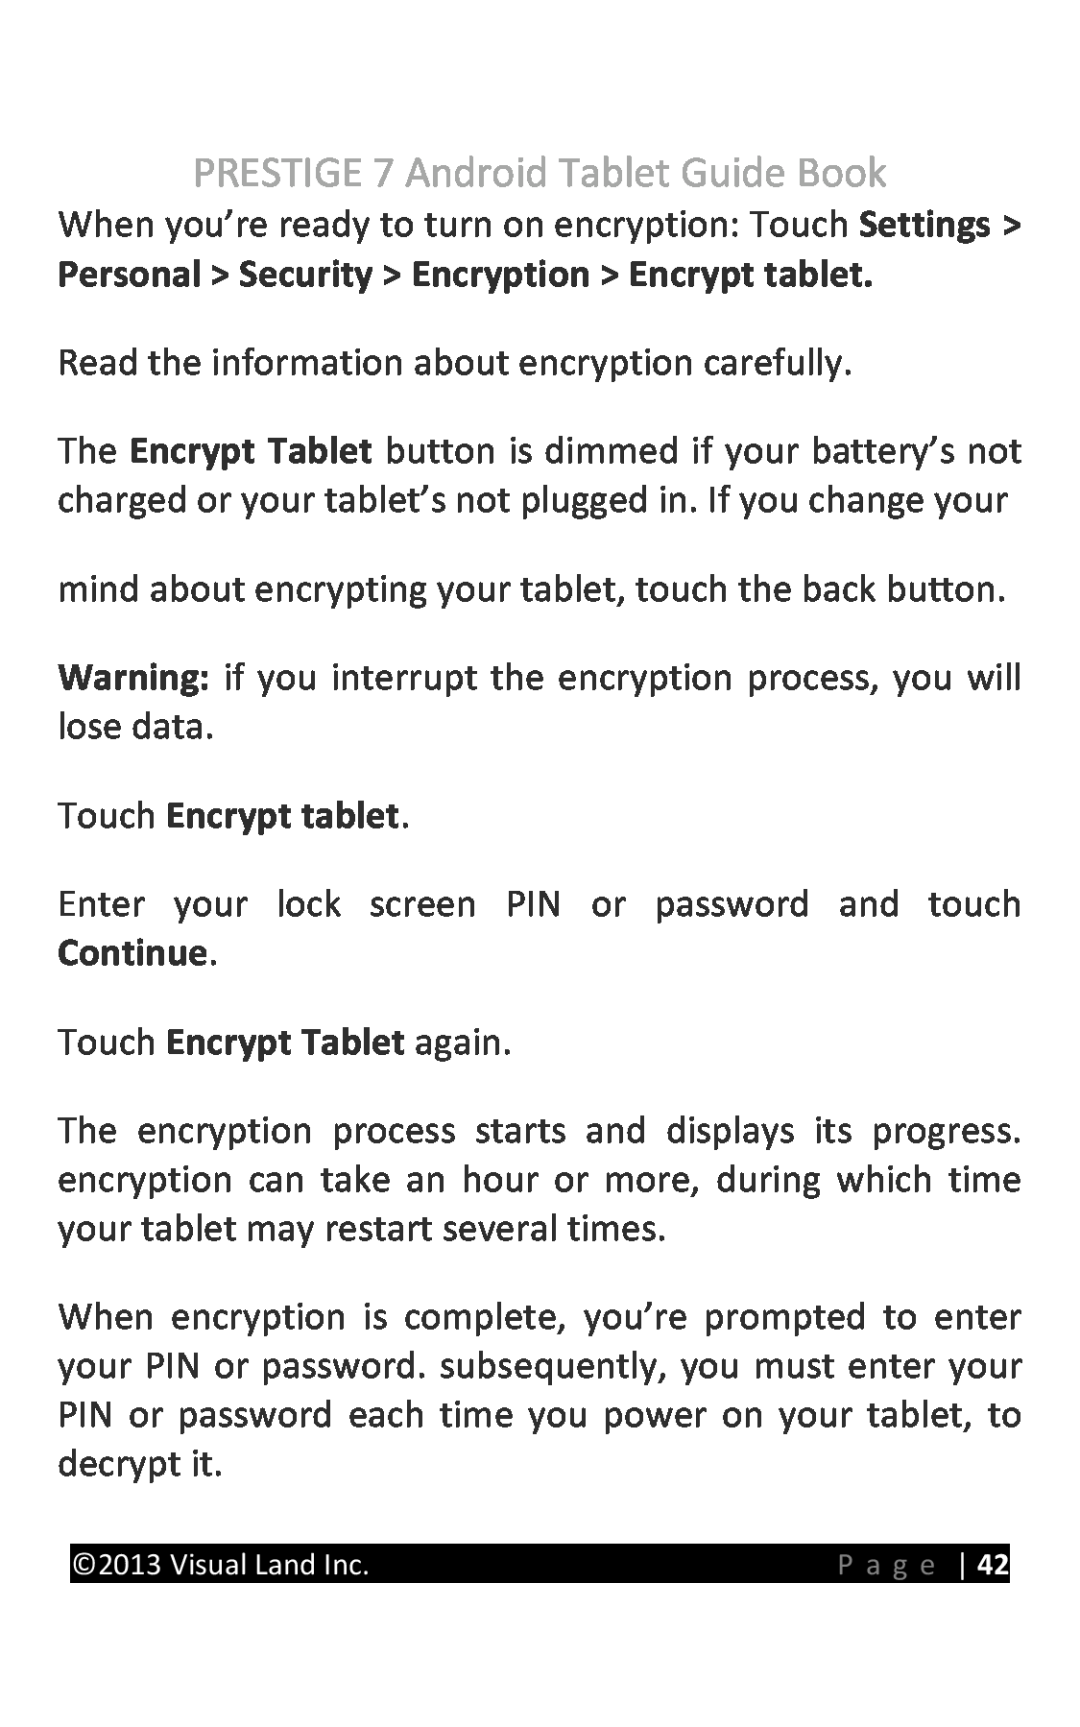 Visual Land 7D8TCBLK manual Personal Security Encryption Encrypt tablet, Touch Encrypt tablet, Touch Encrypt Tablet again 